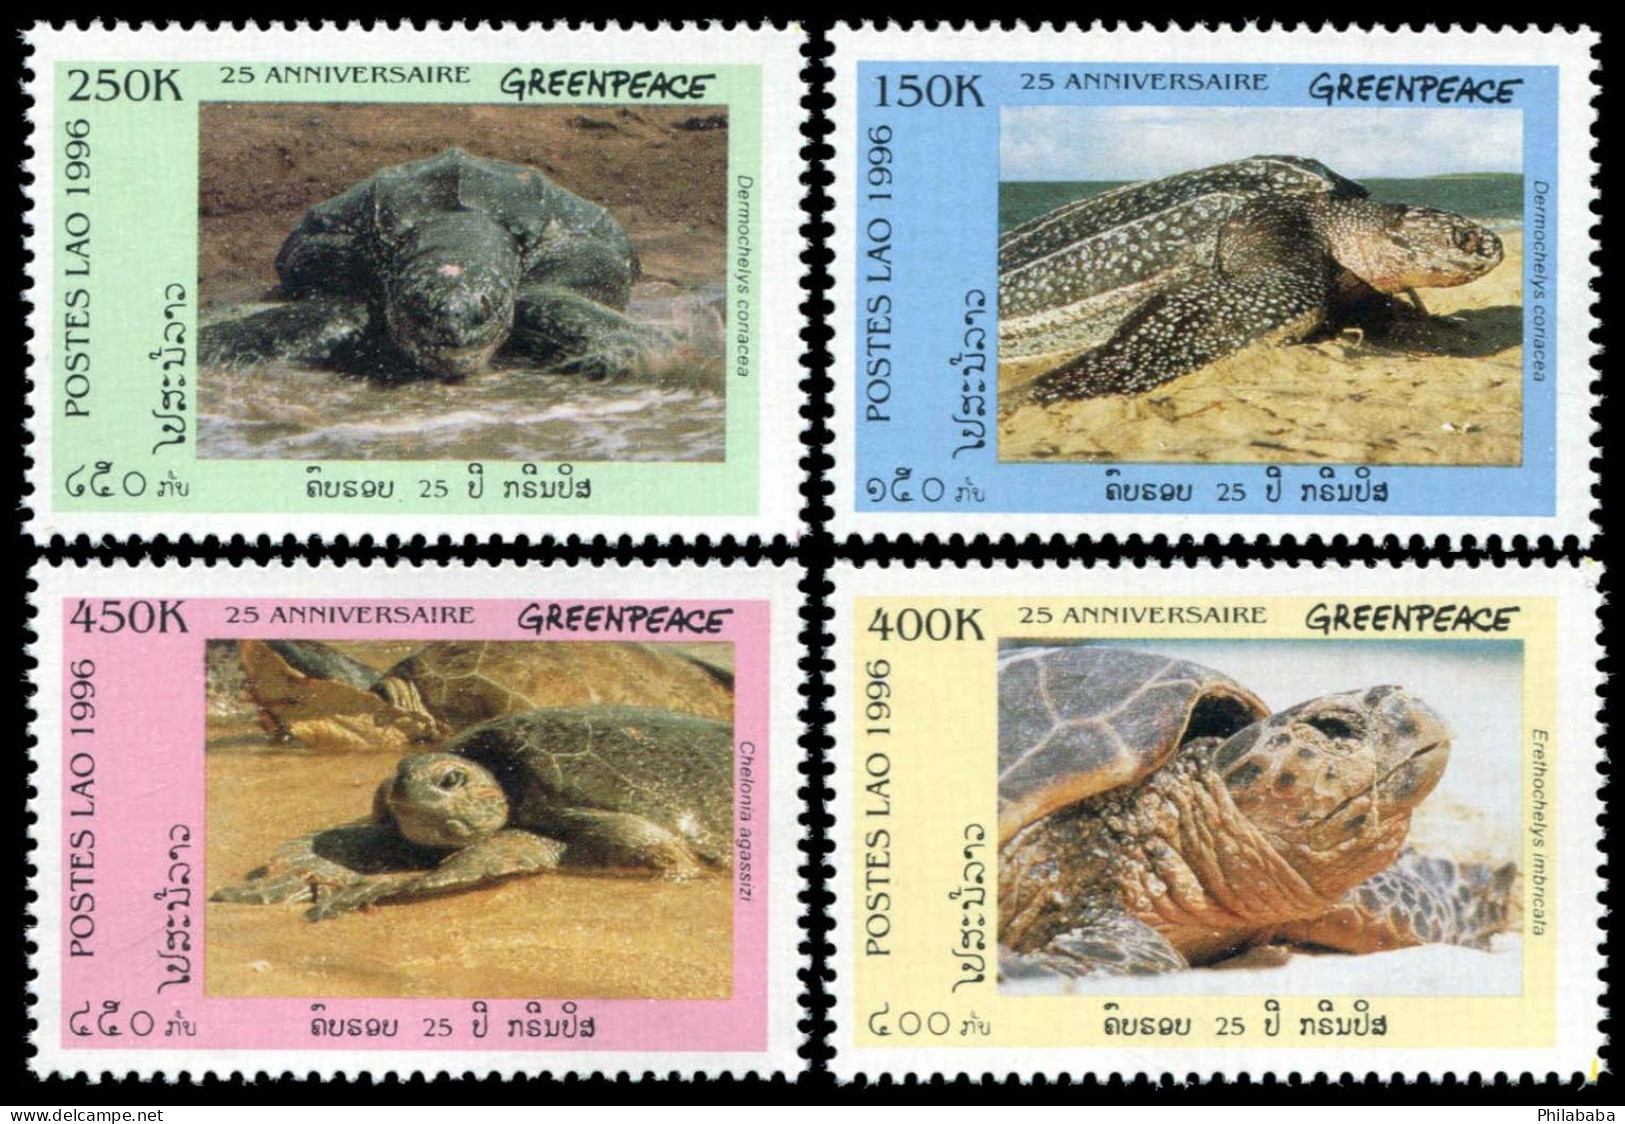 LAOS 1996 - YT 1244A-1244D ; Mi# 1547-50 ; Sc 1304A-1304D MNH Greenpeace - Turtles - Laos